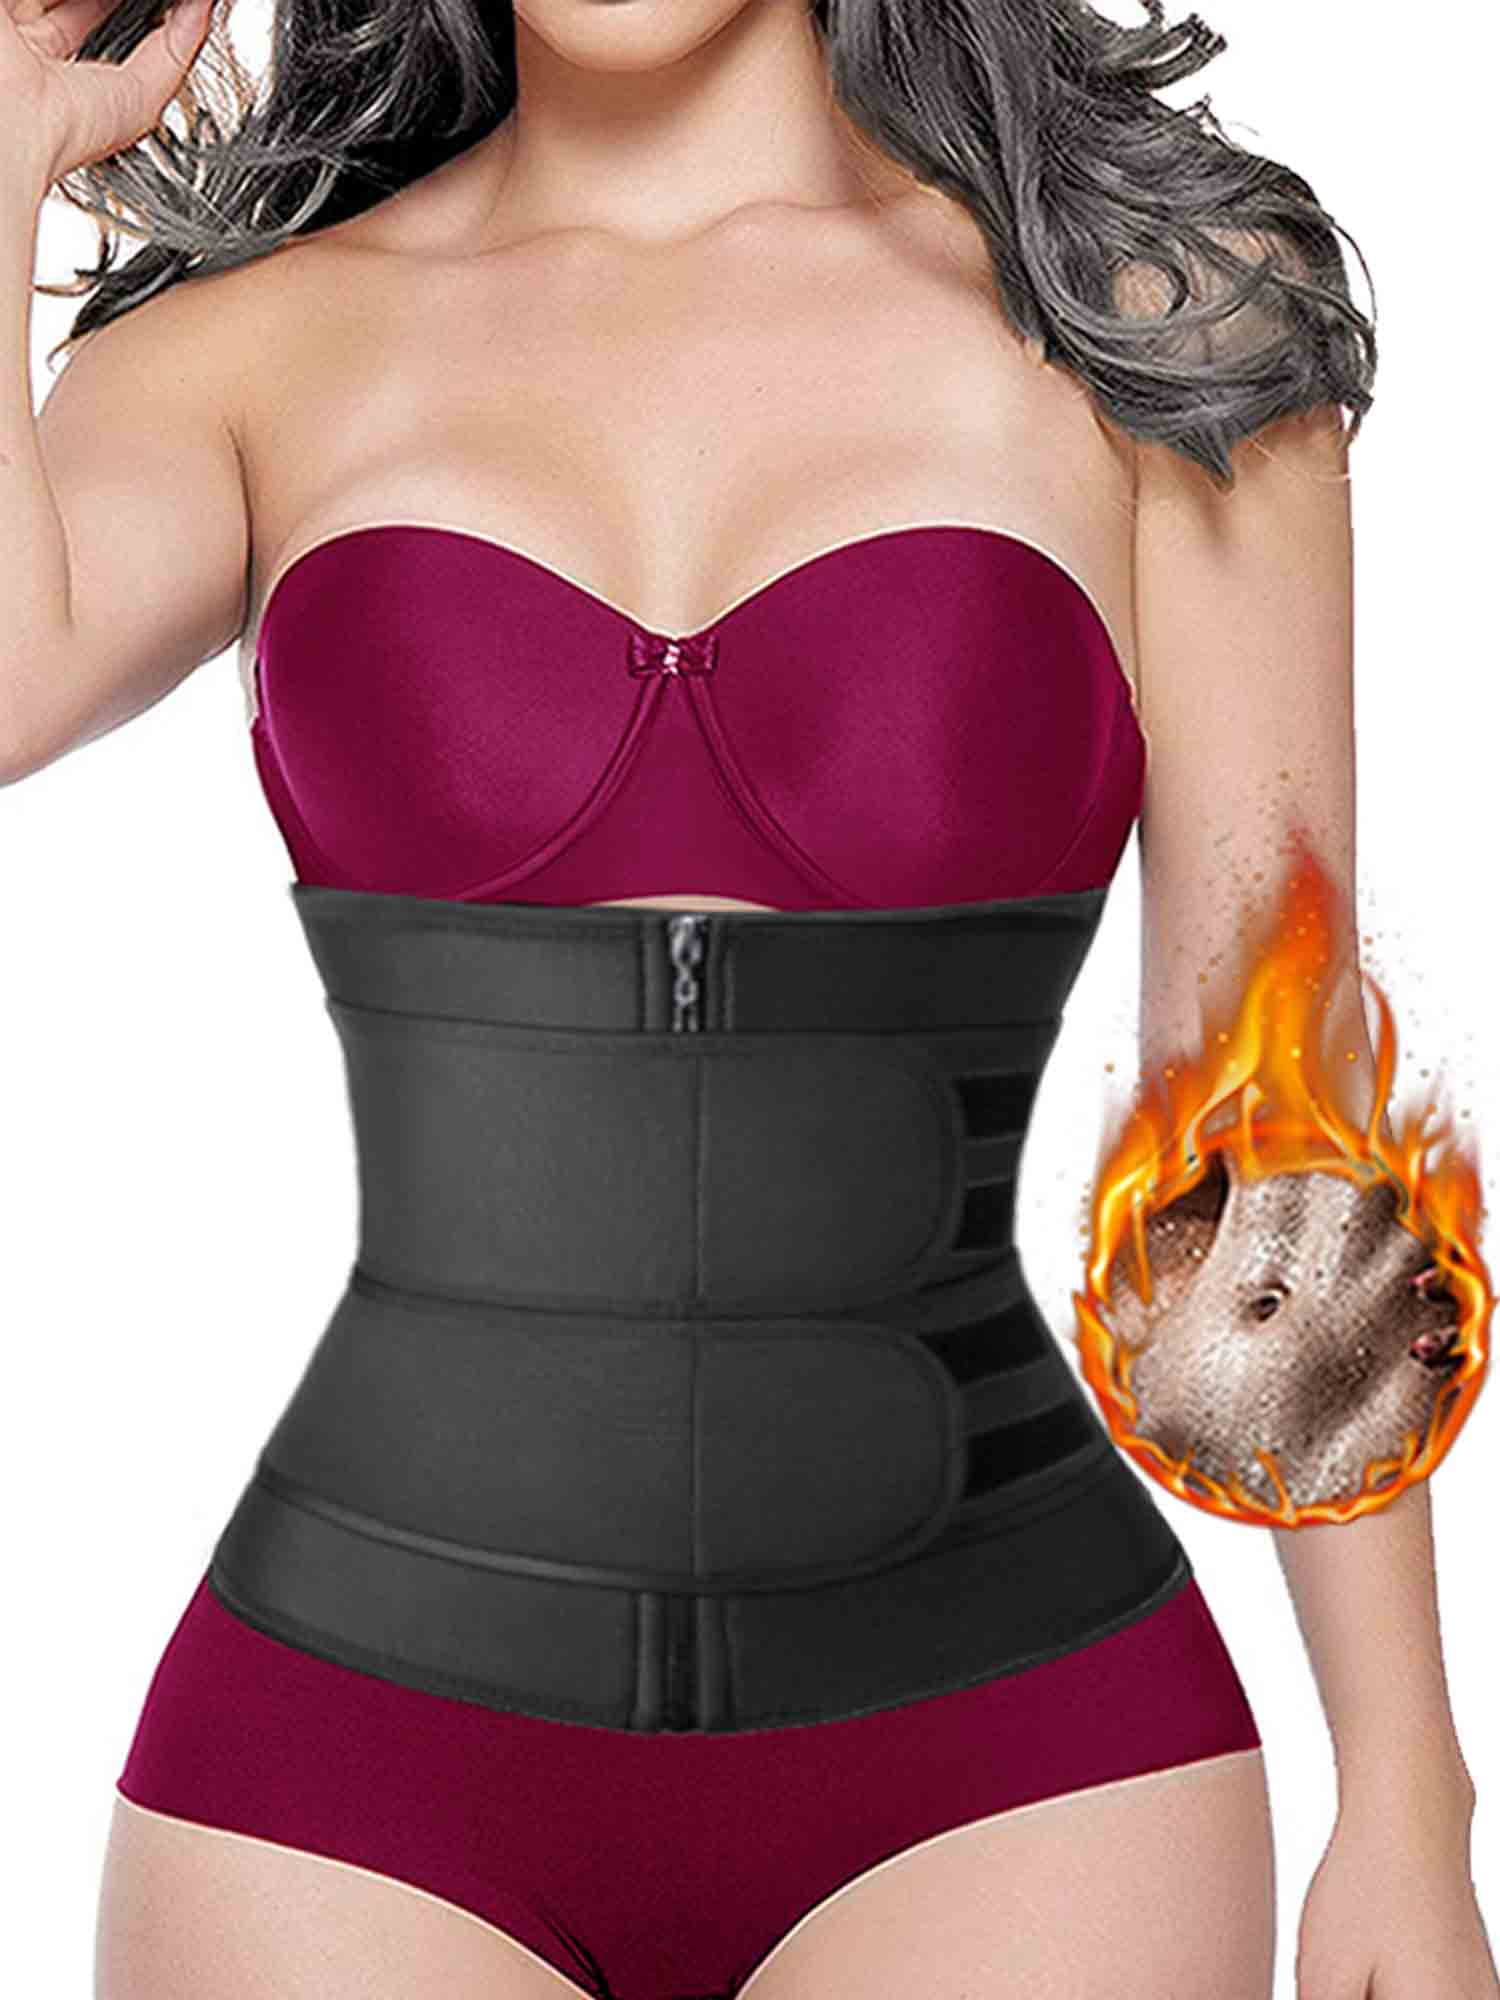 Details about   Women Waist Trainer Vest Gym Adjustable Sauna Sweat Belt Thermal Body Shaper US 